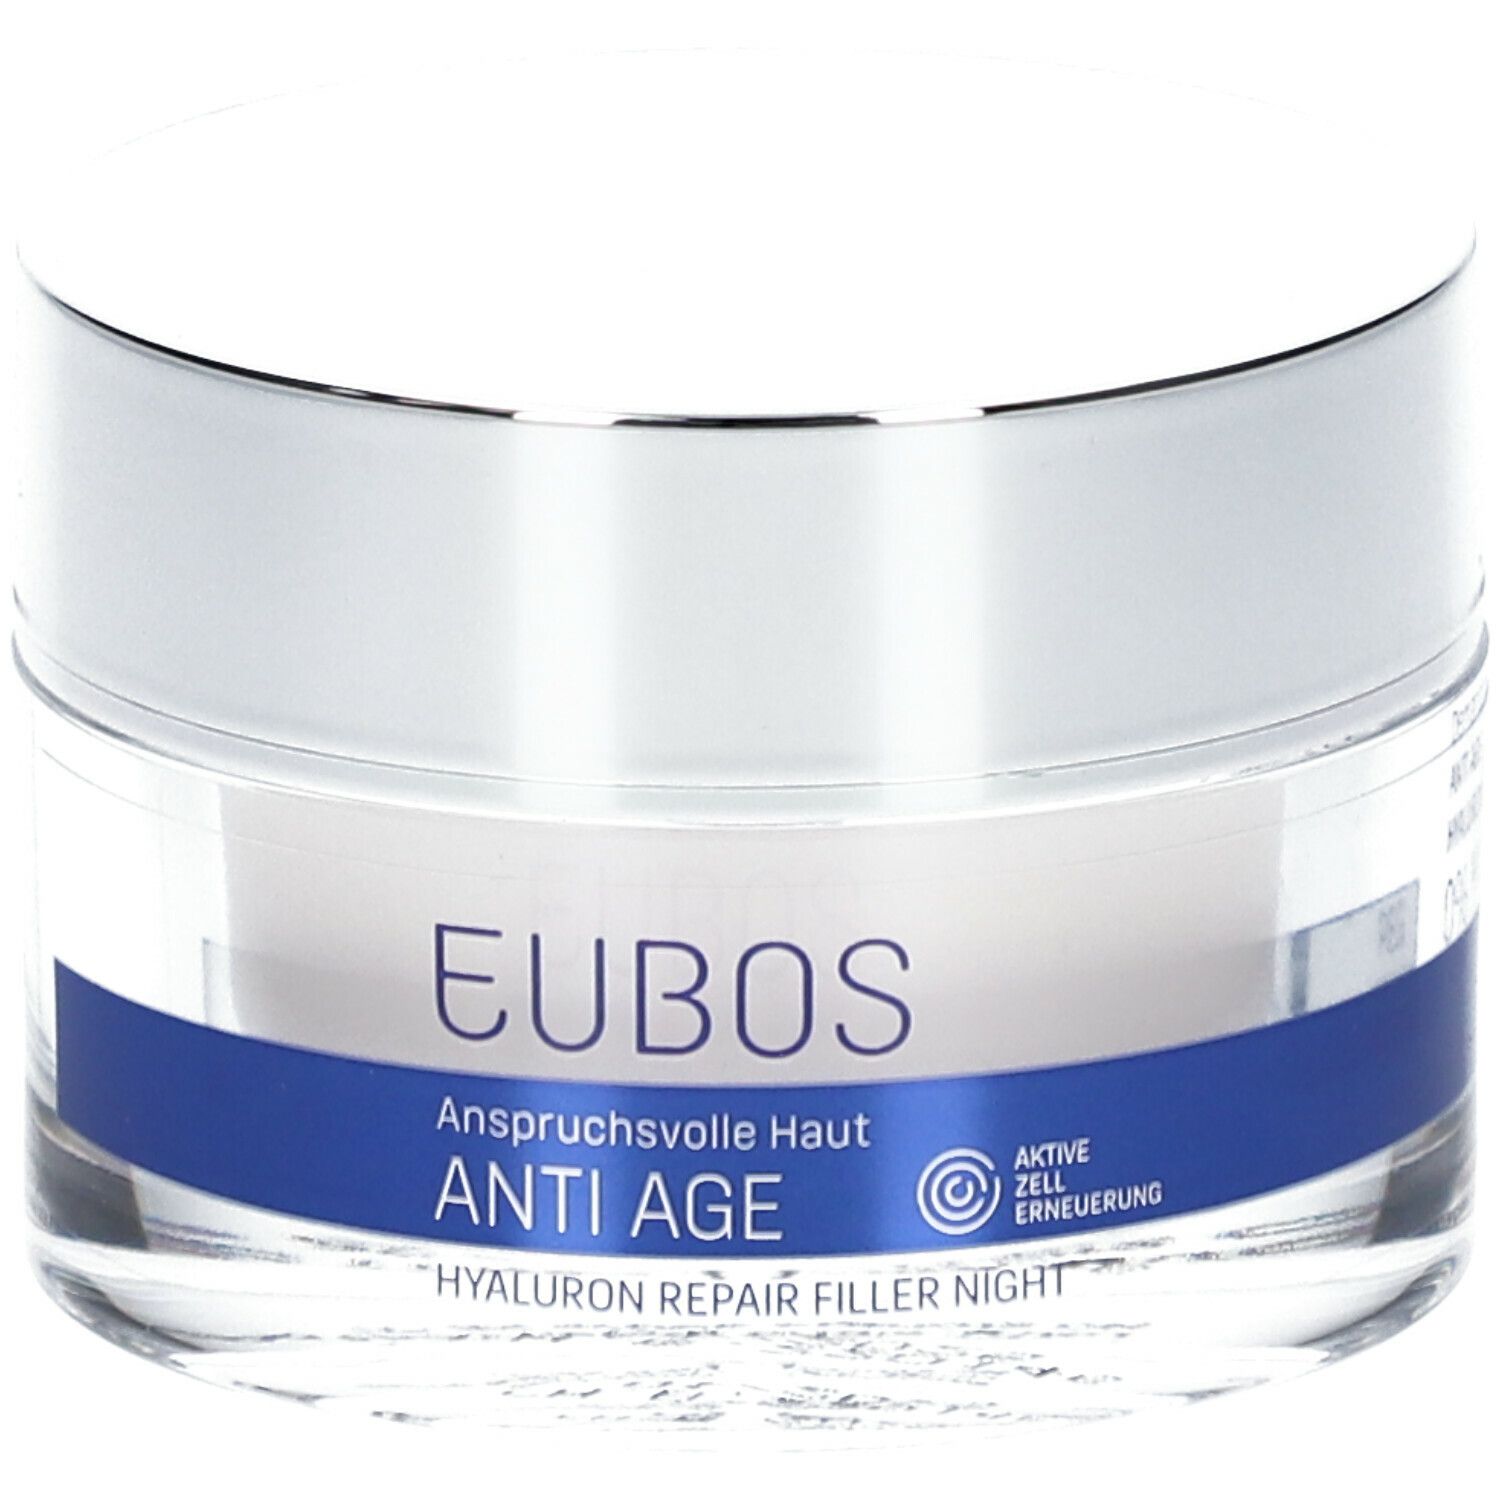 Eubos® Anti-Age Hyaluron Repair Filler Night